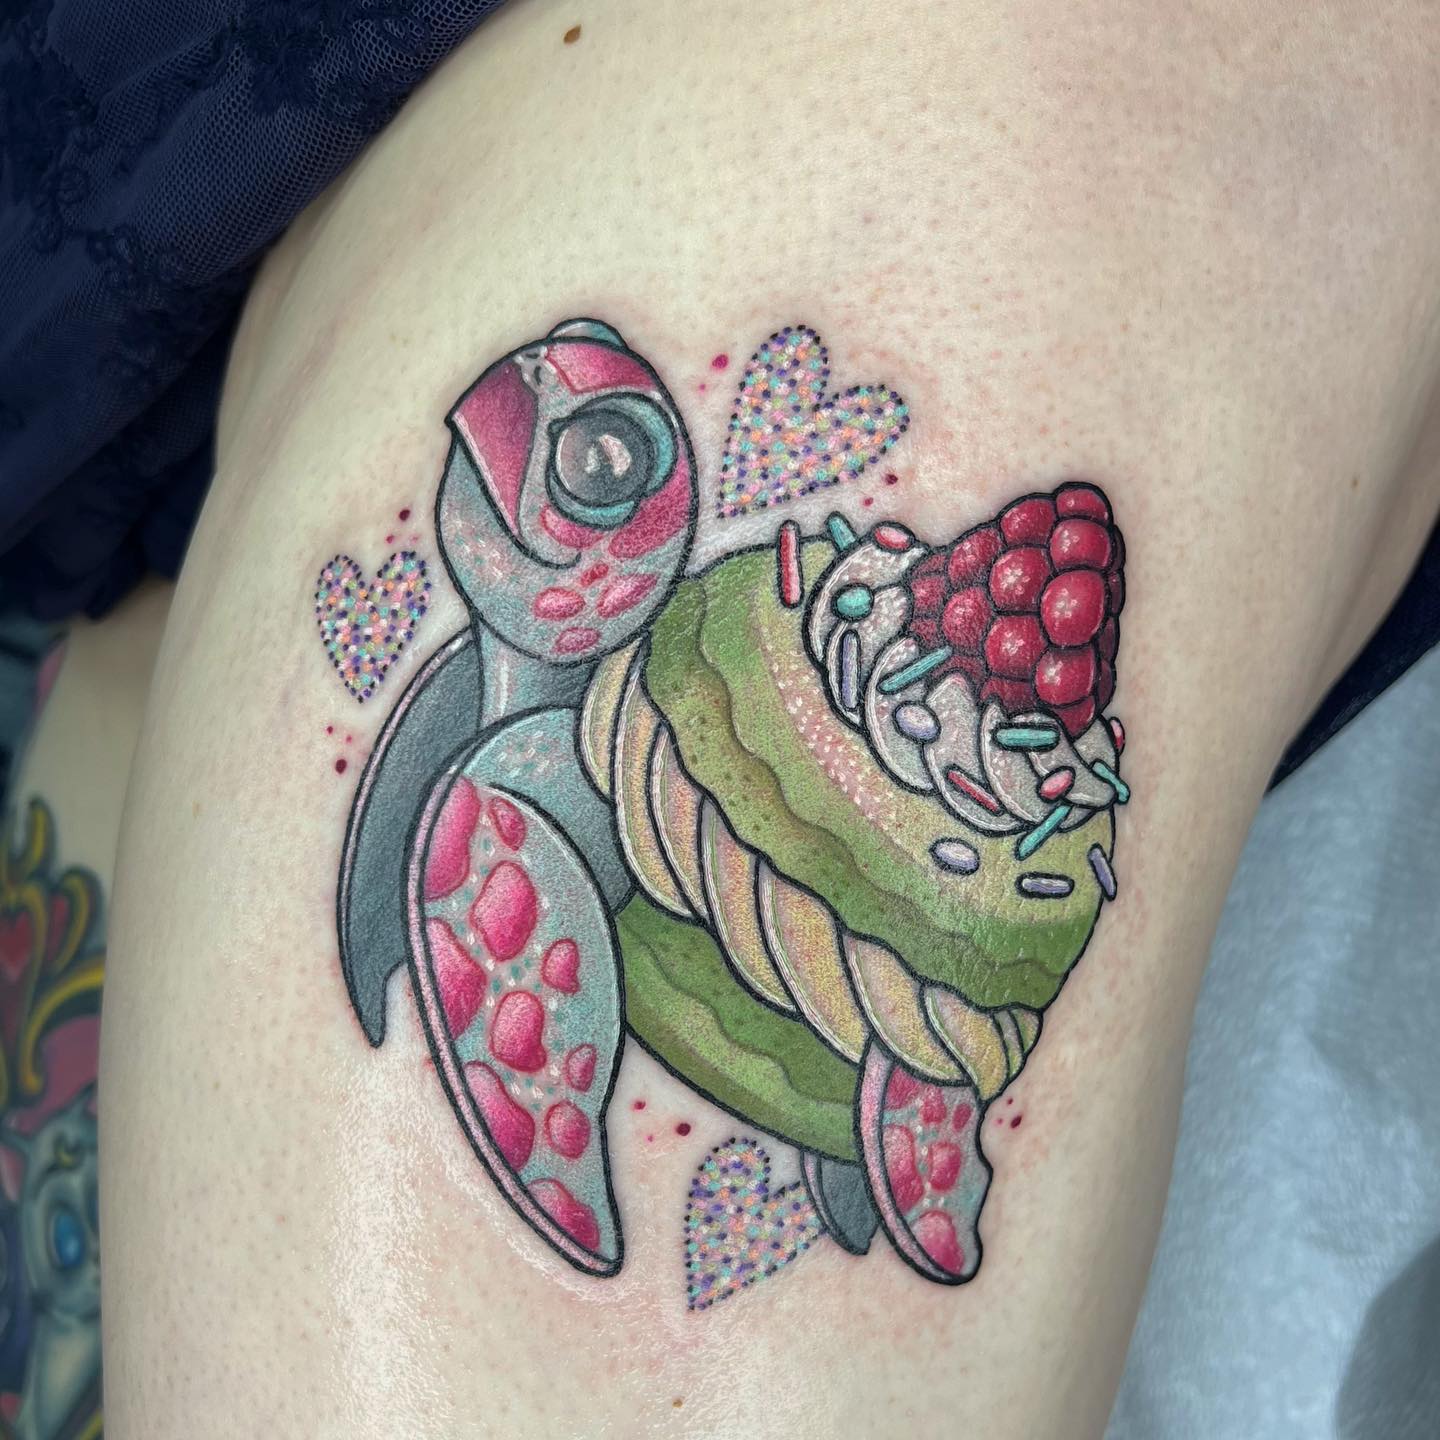 Tatuaje creativo de una tortuga marina